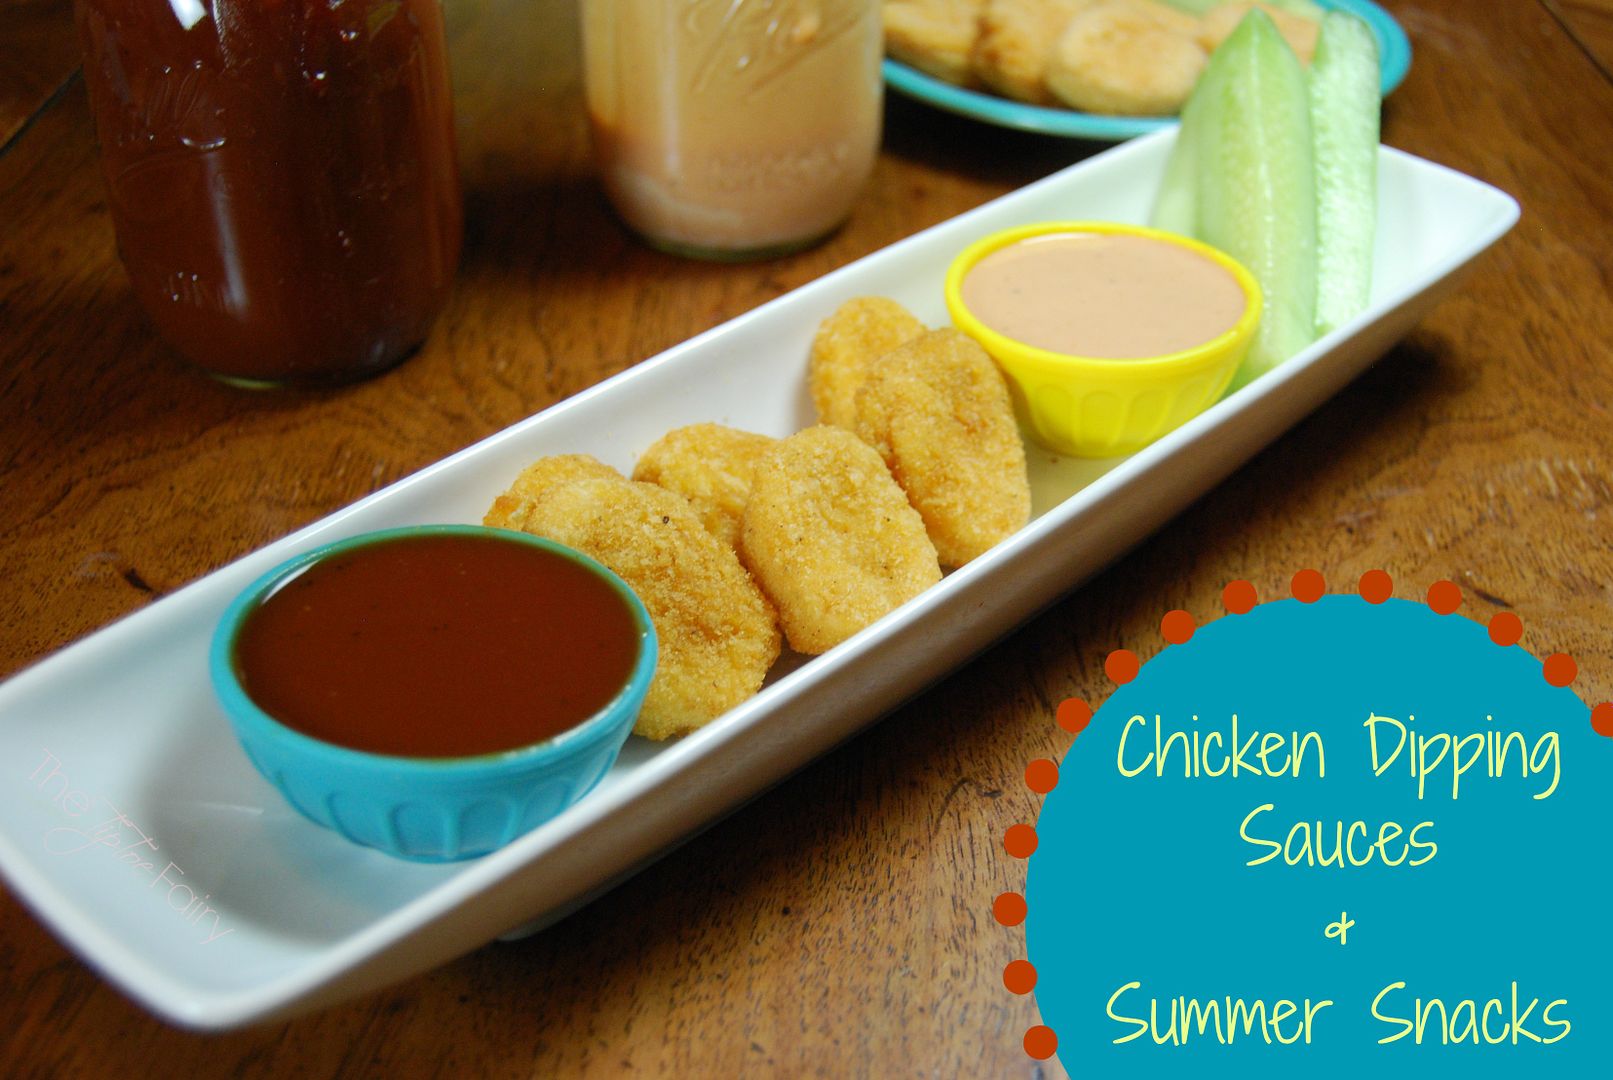 Homemade Dipping Sauces & Summer Snacks #SummerSauce #shop #cbias | The TipToe Fairy